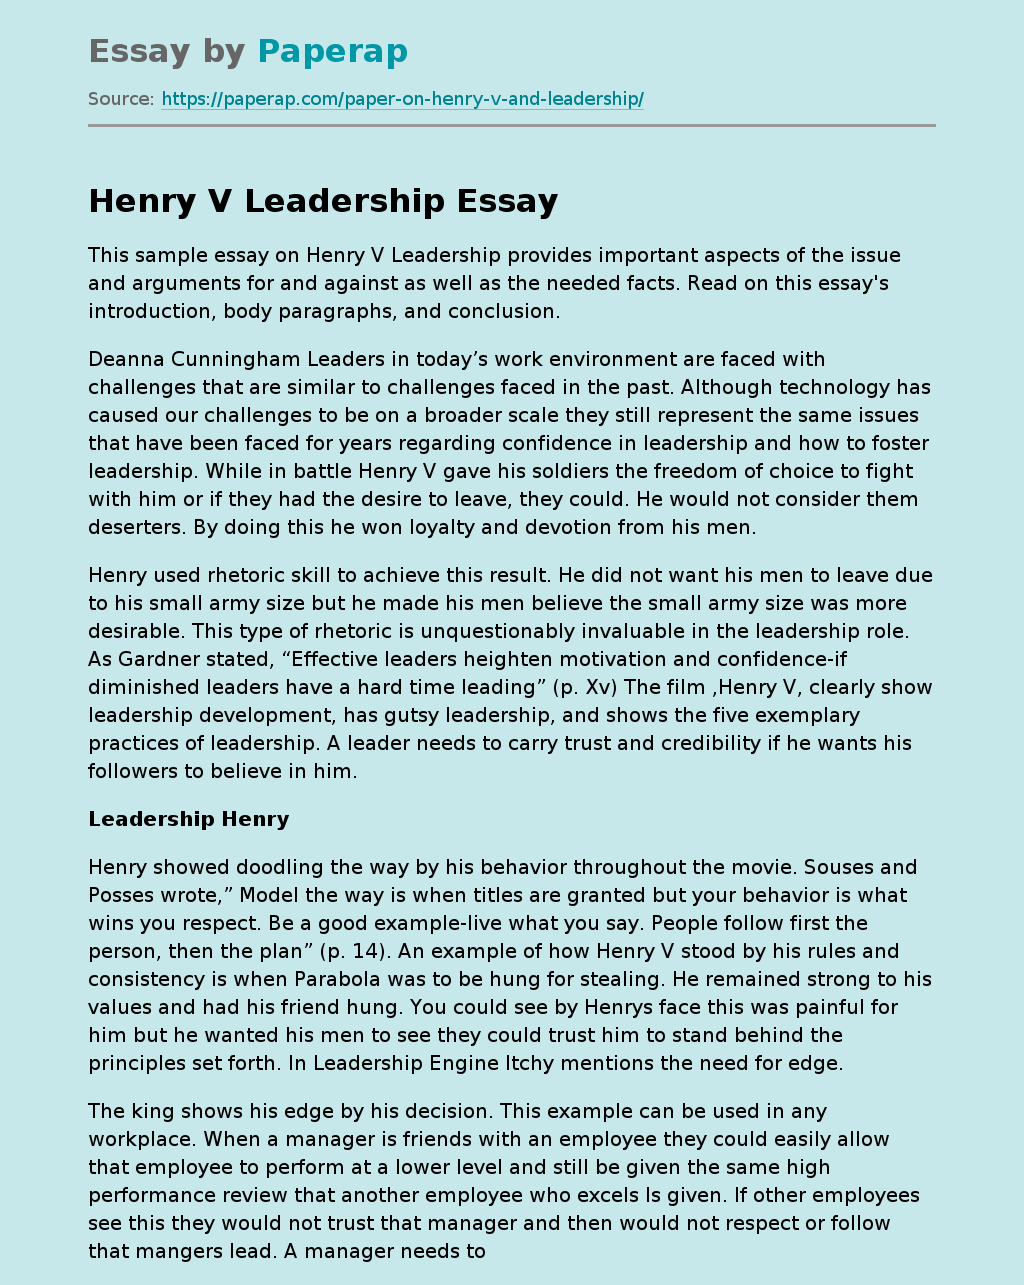 Leadership of Henry V and Deanna Cunningham